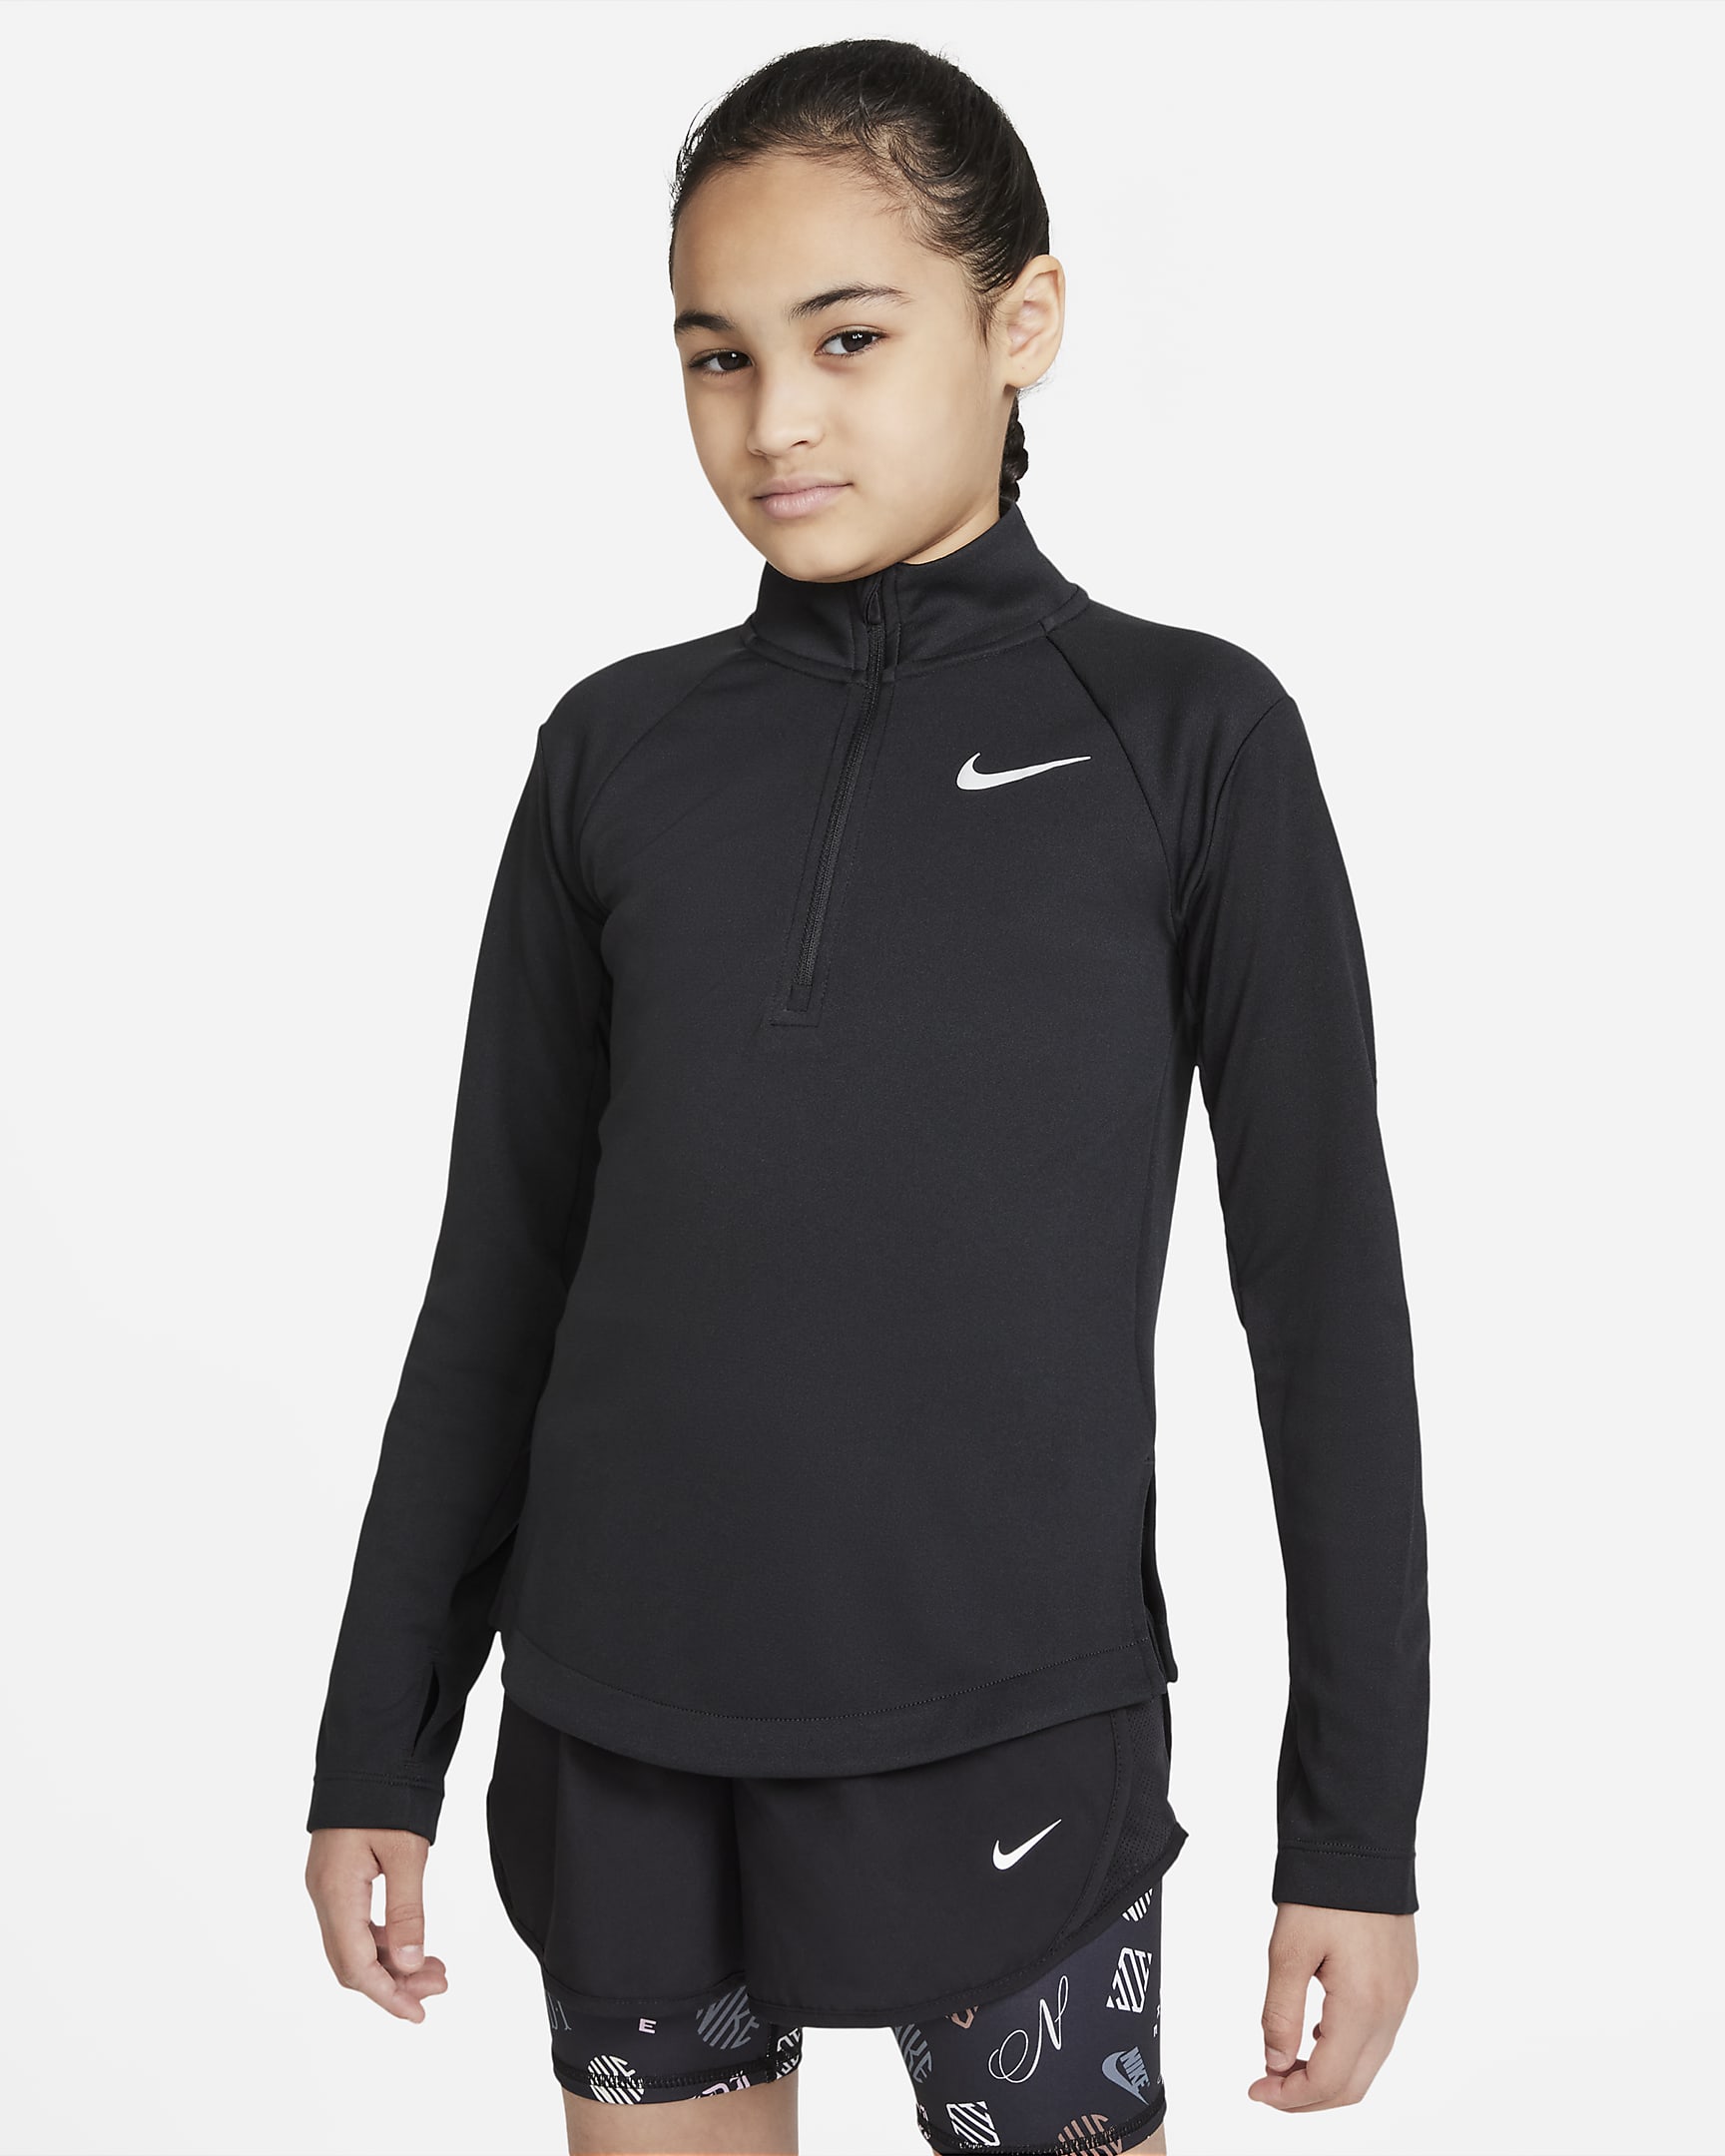 Nike Dri-FIT Older Kids' (Girls') Long-Sleeve Running Top. Nike IL